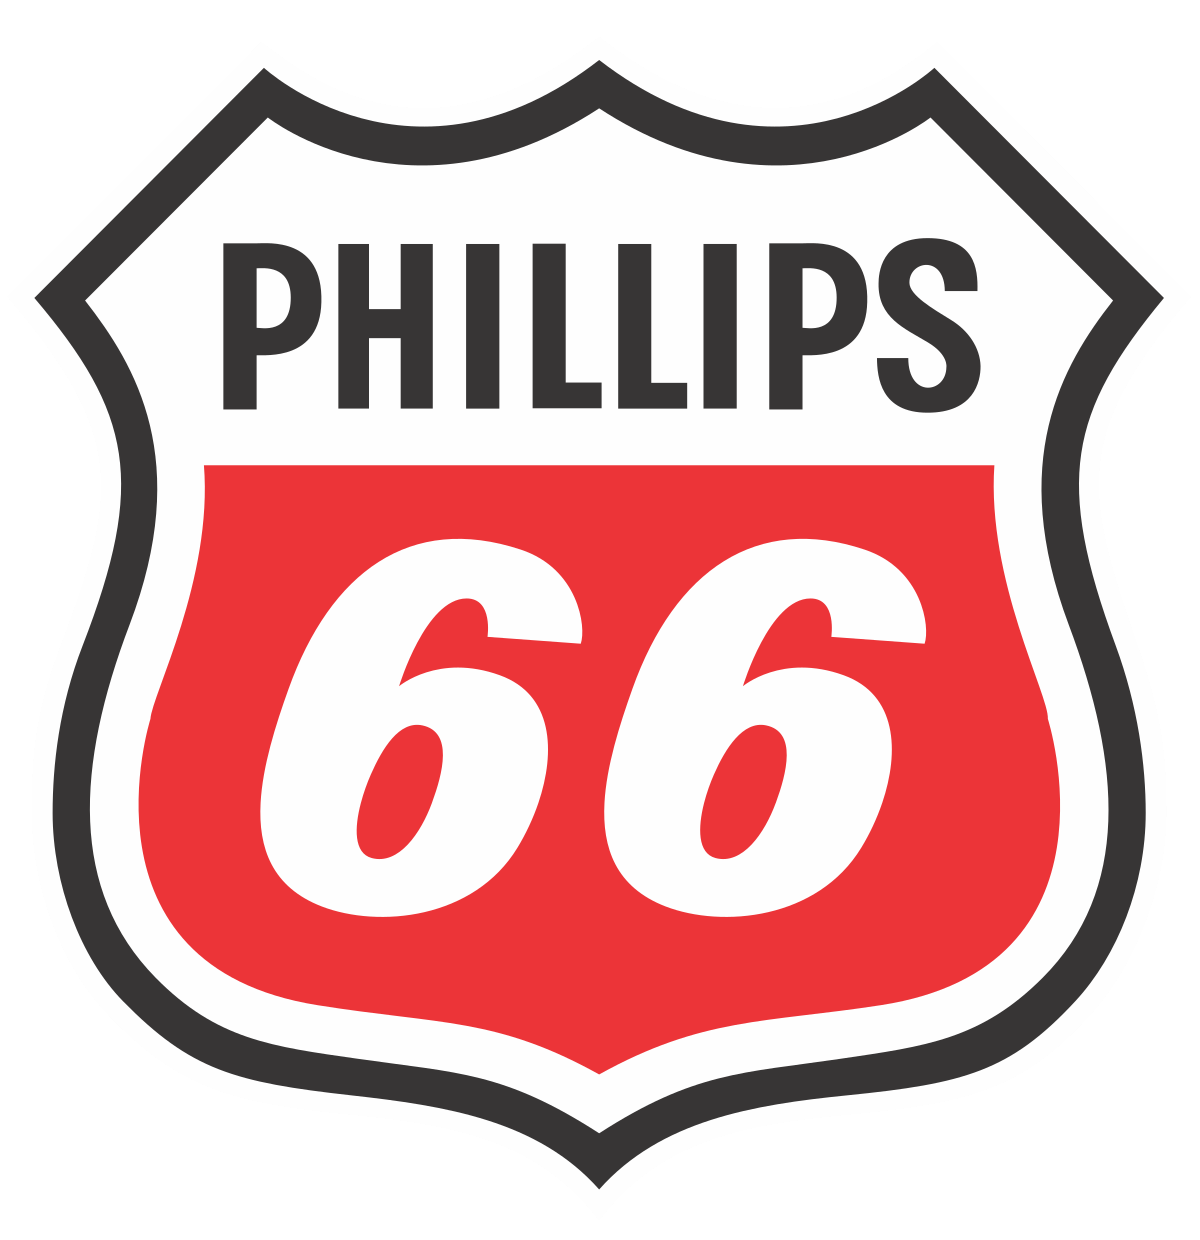 Phillips 66 Homepage